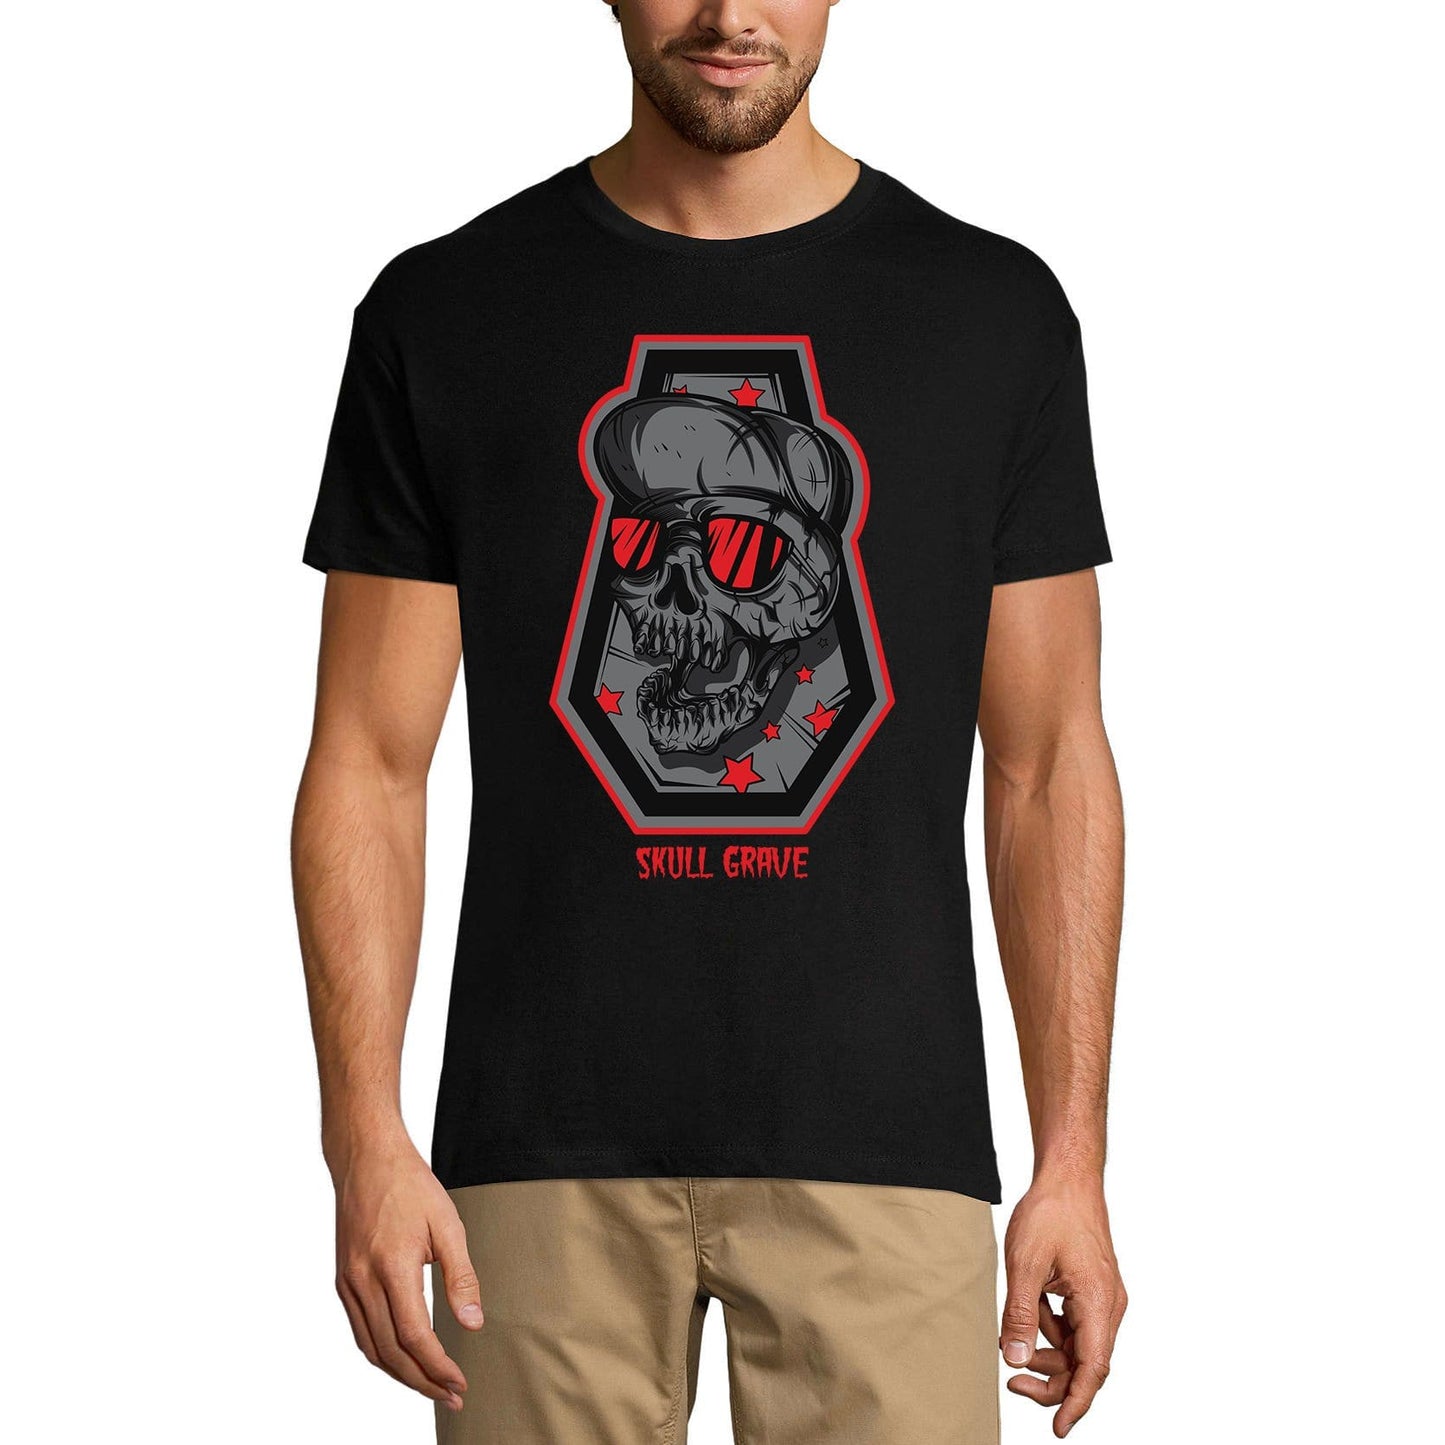 ULTRABASIC Herren-T-Shirt mit Totenkopf-Motiv, gruseliges Kurzarm-T-Shirt